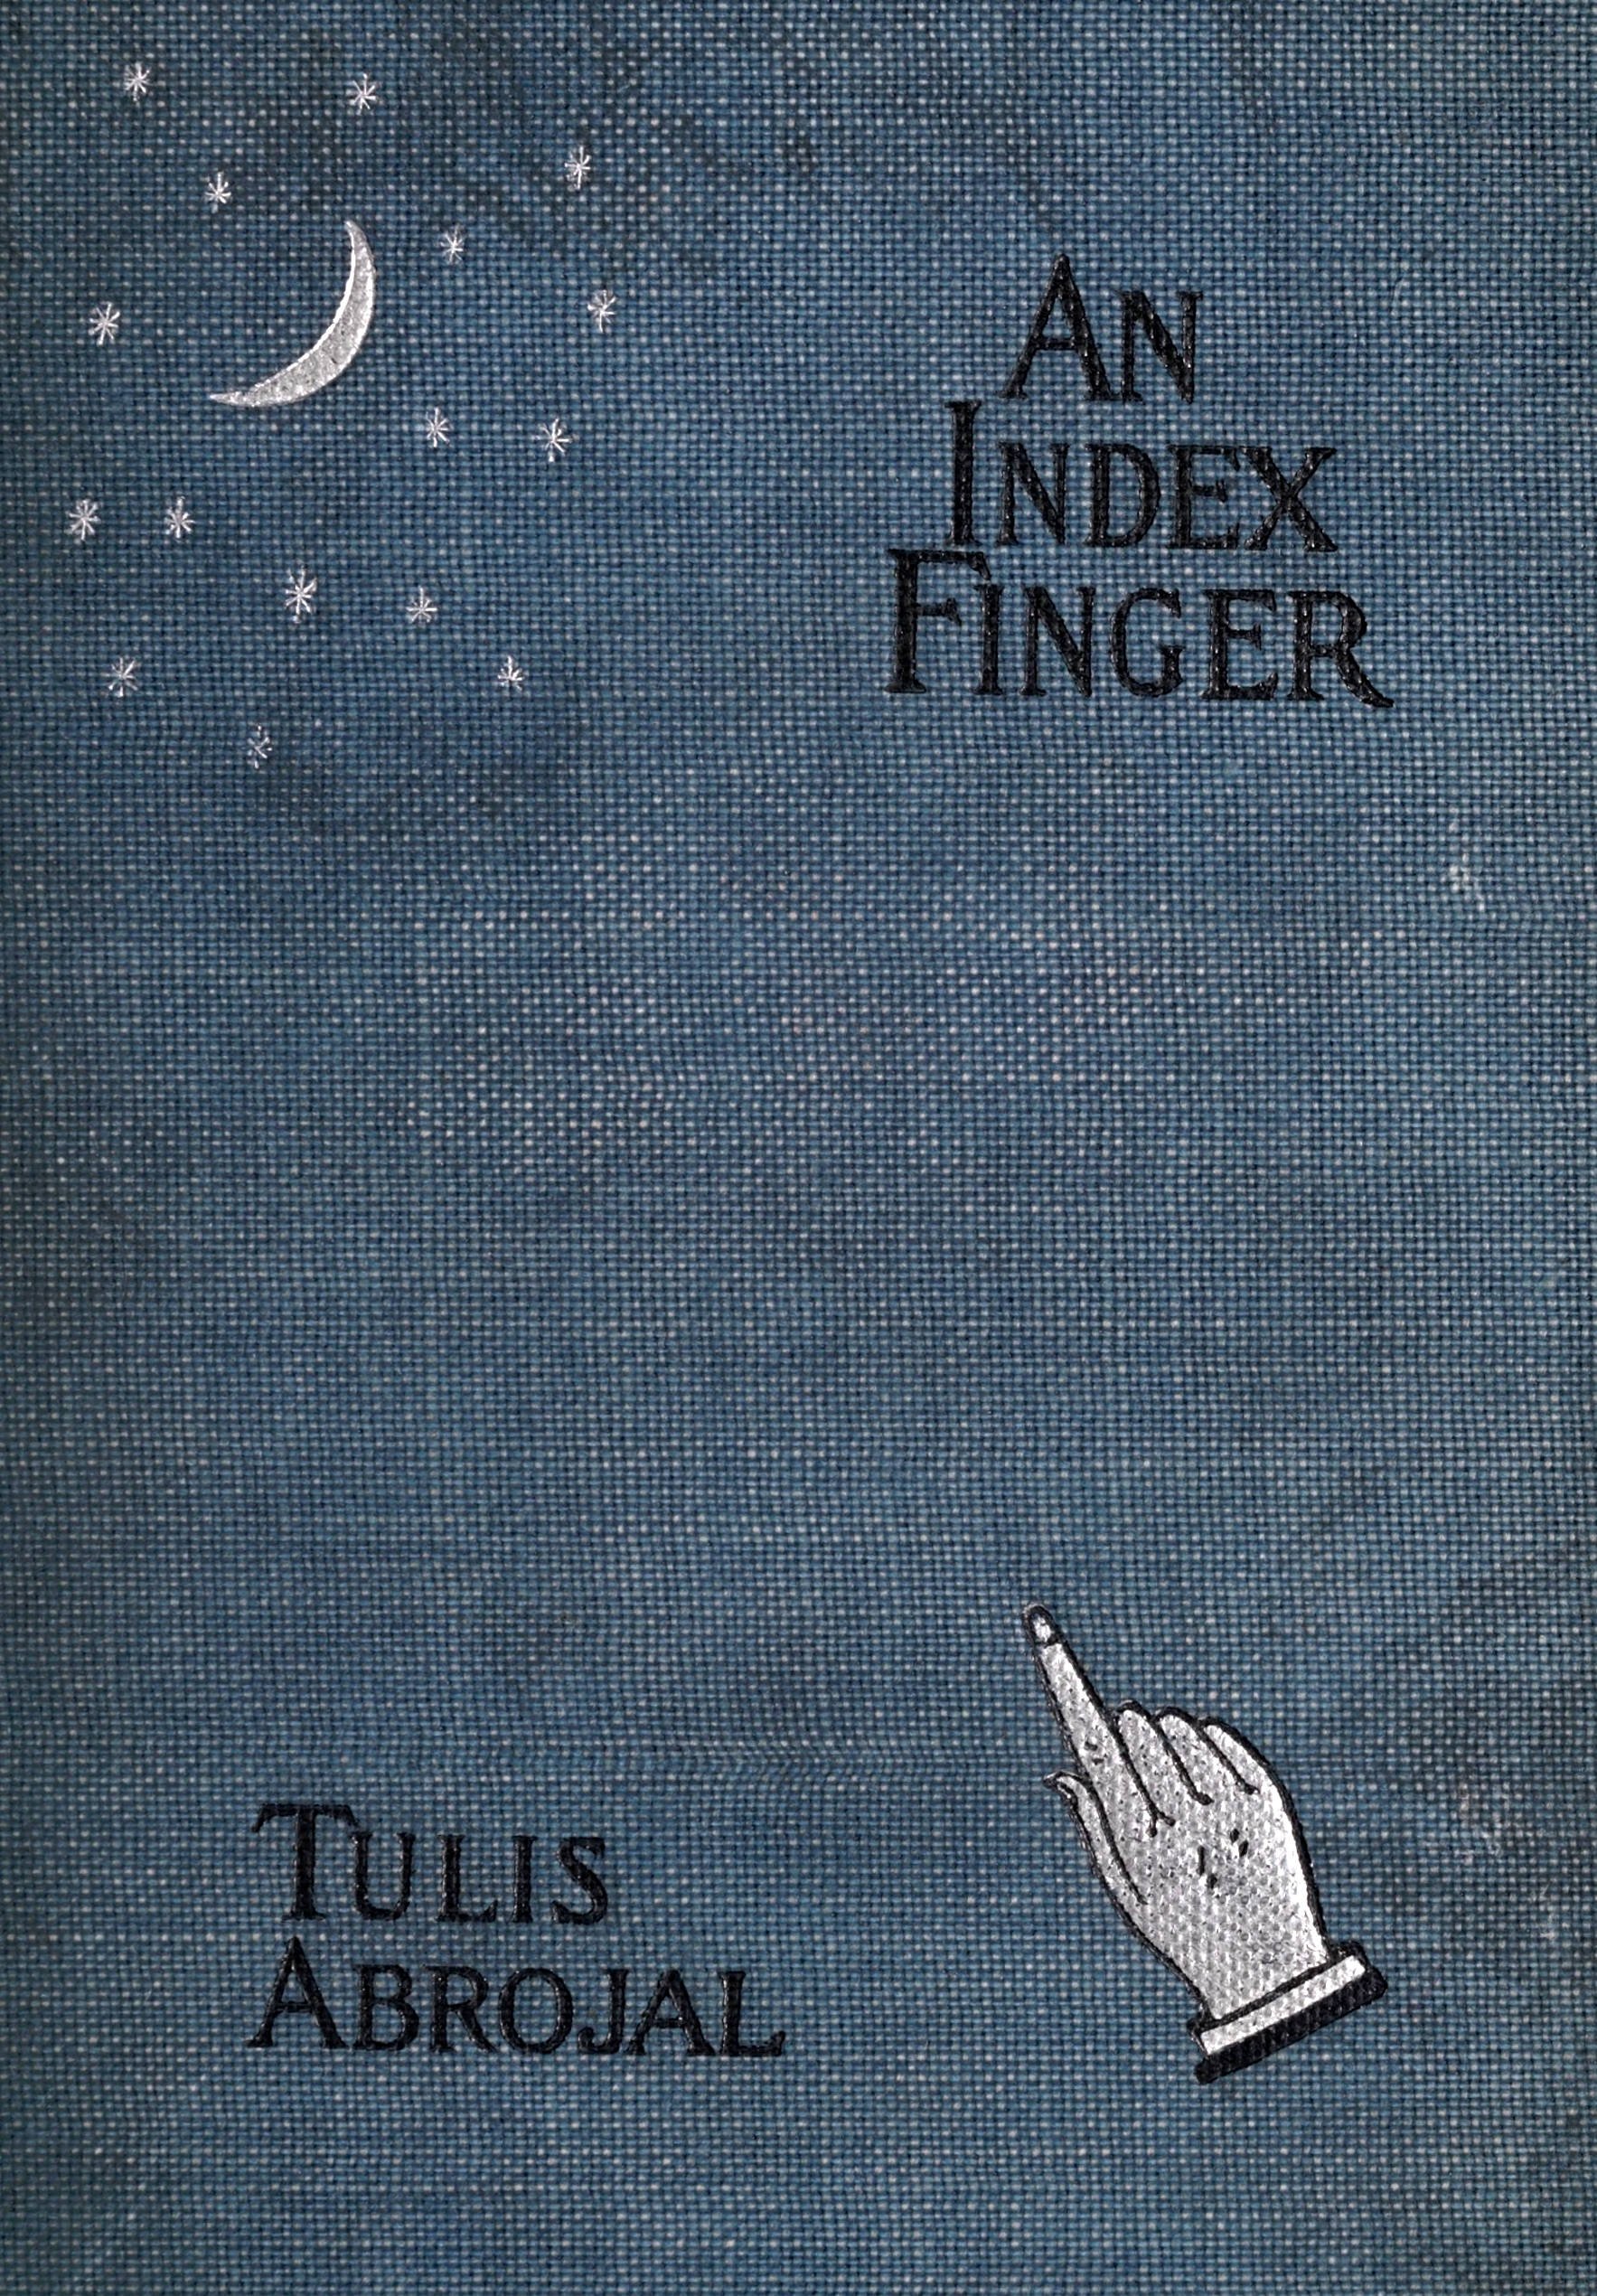 An index finger